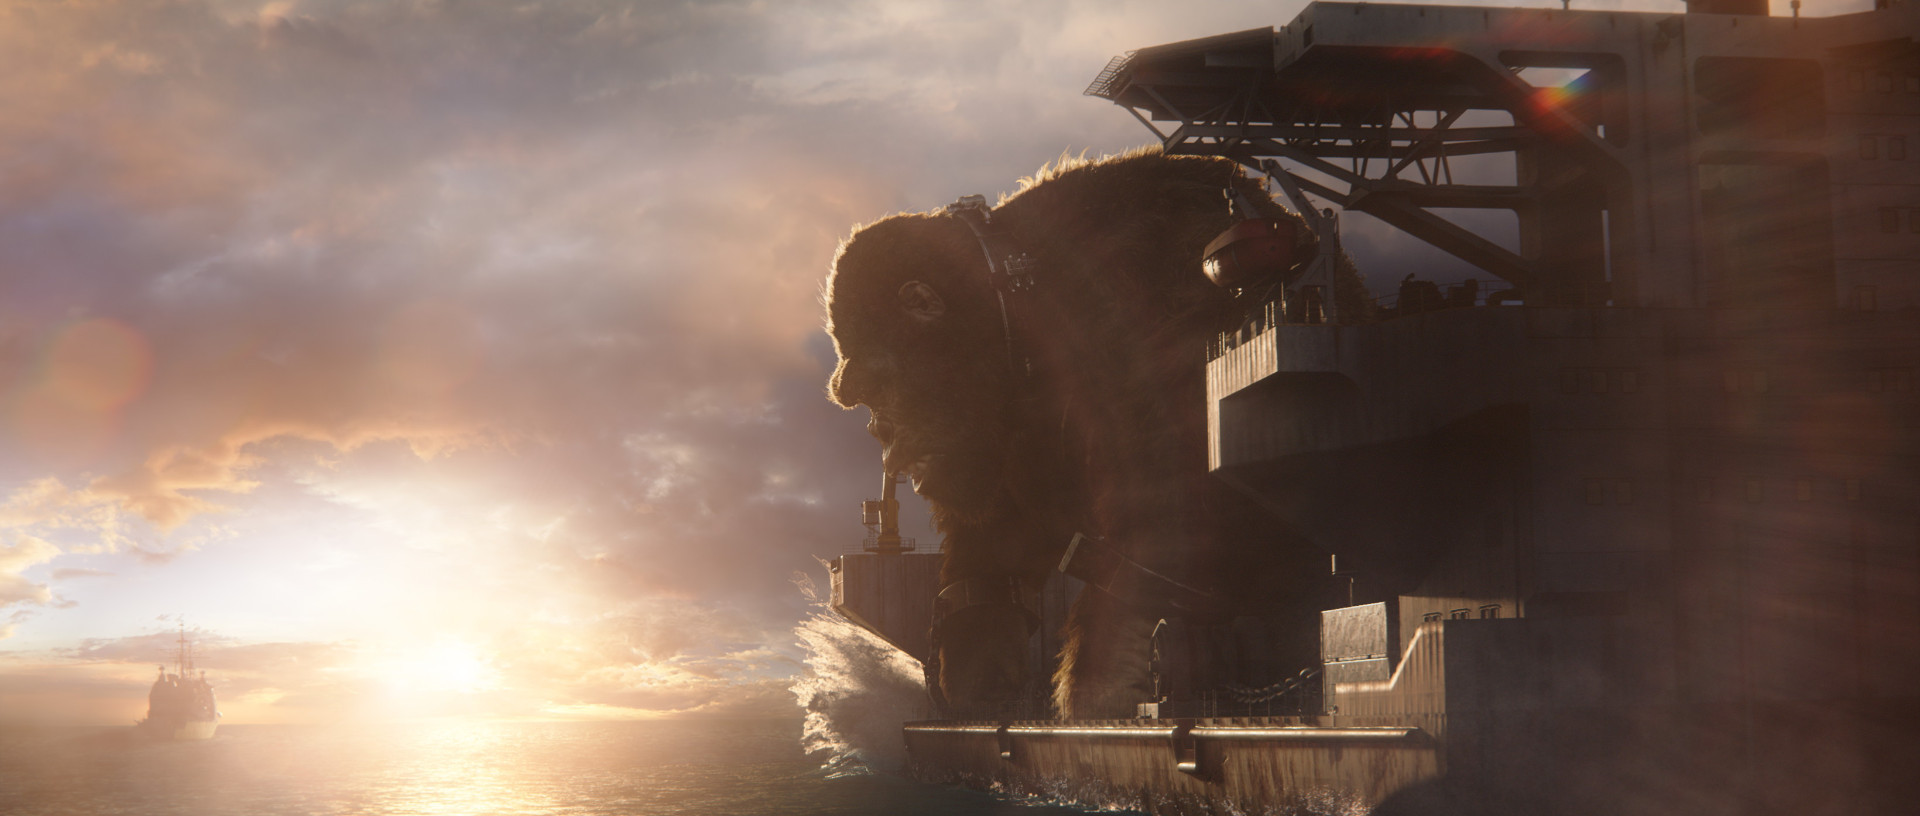 Godzilla vs Kong - visual effects by Scanline VFX